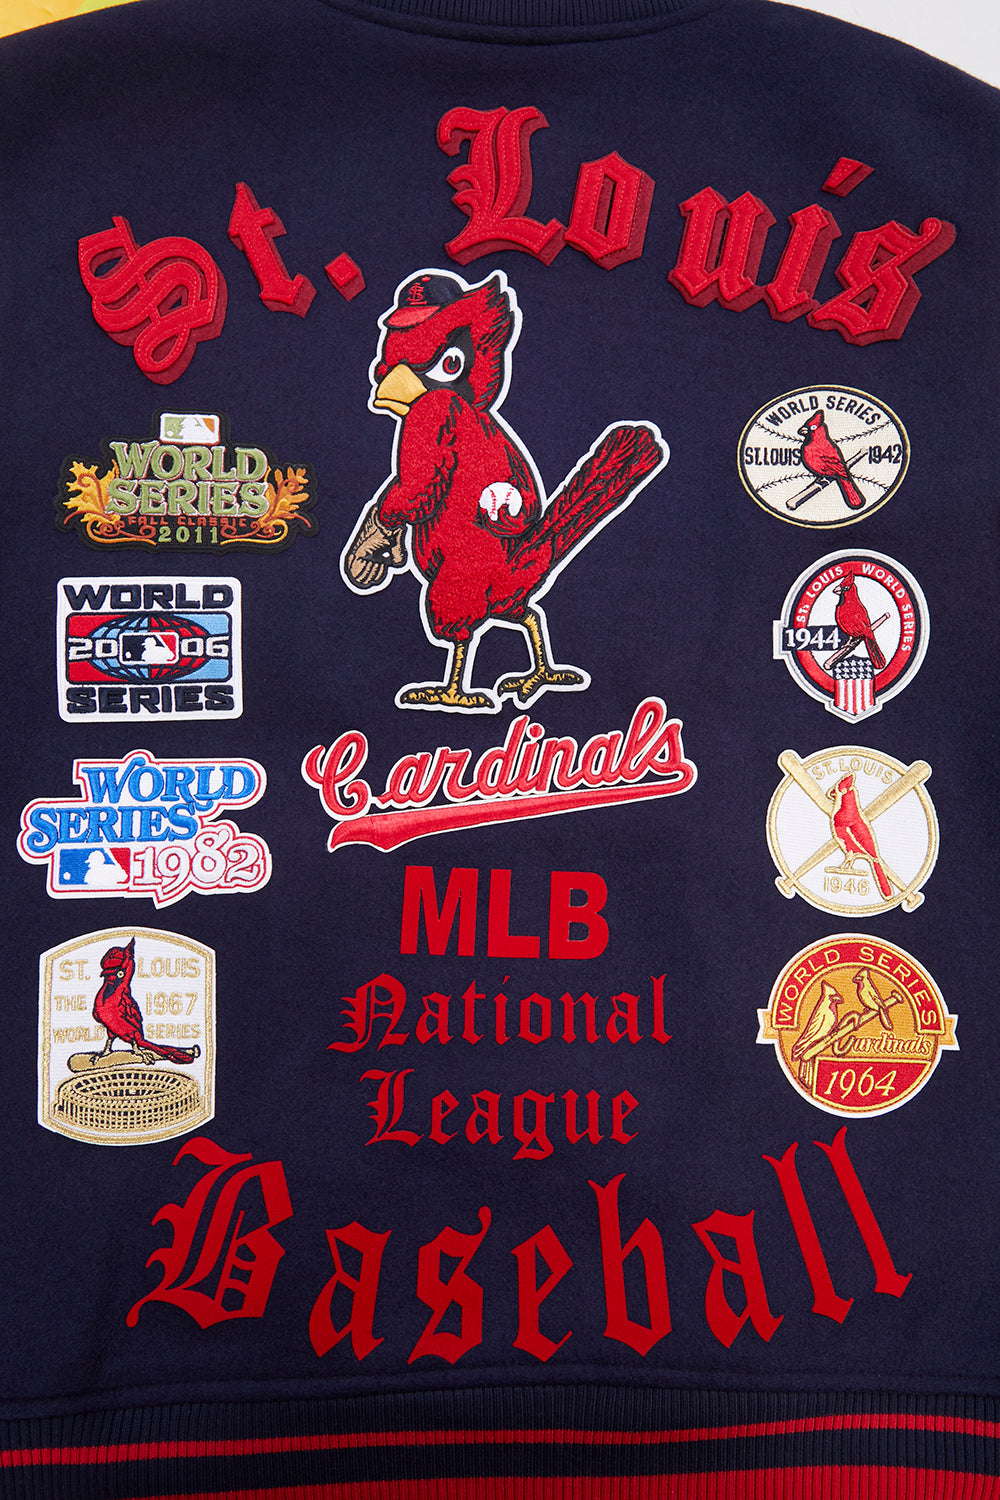 St. Louis Cardinals Vintage Logo Pin - 1967